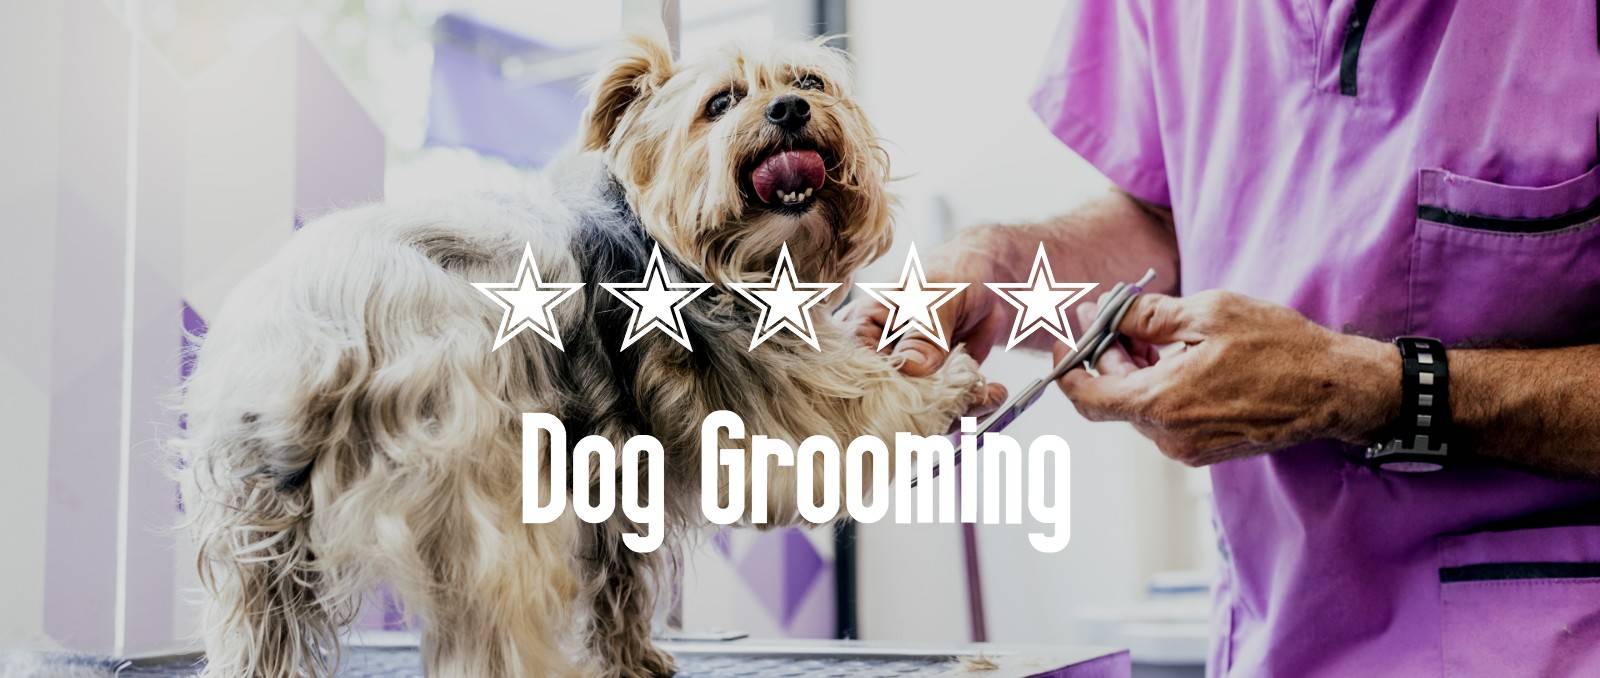 Dog Grooming Dog Groomer